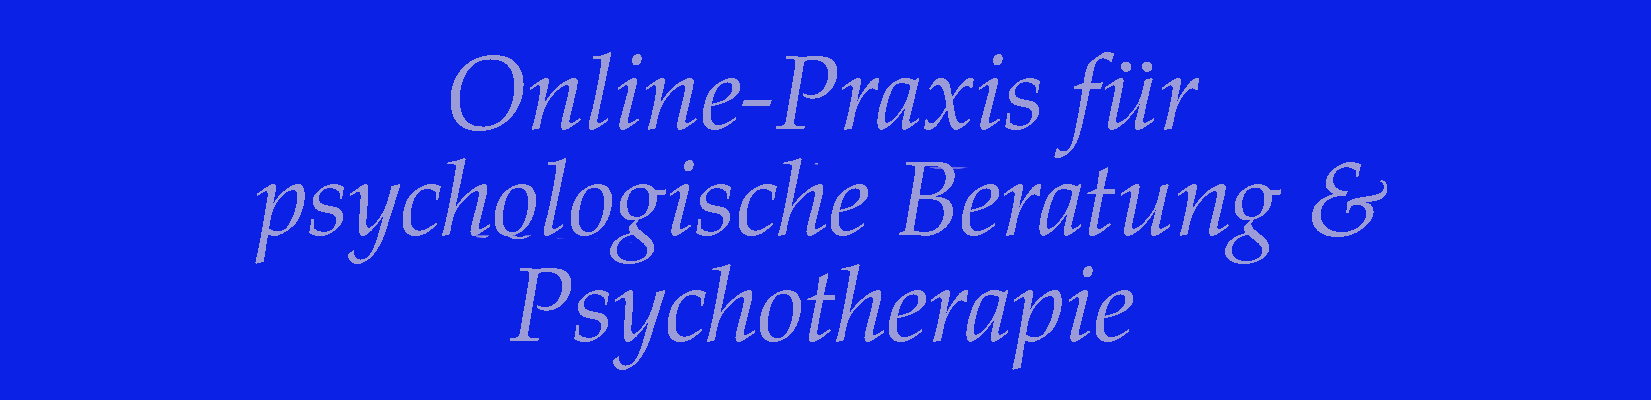 Online-Praxis für psychologische Beratung & Psychotherapie - online Psychologe